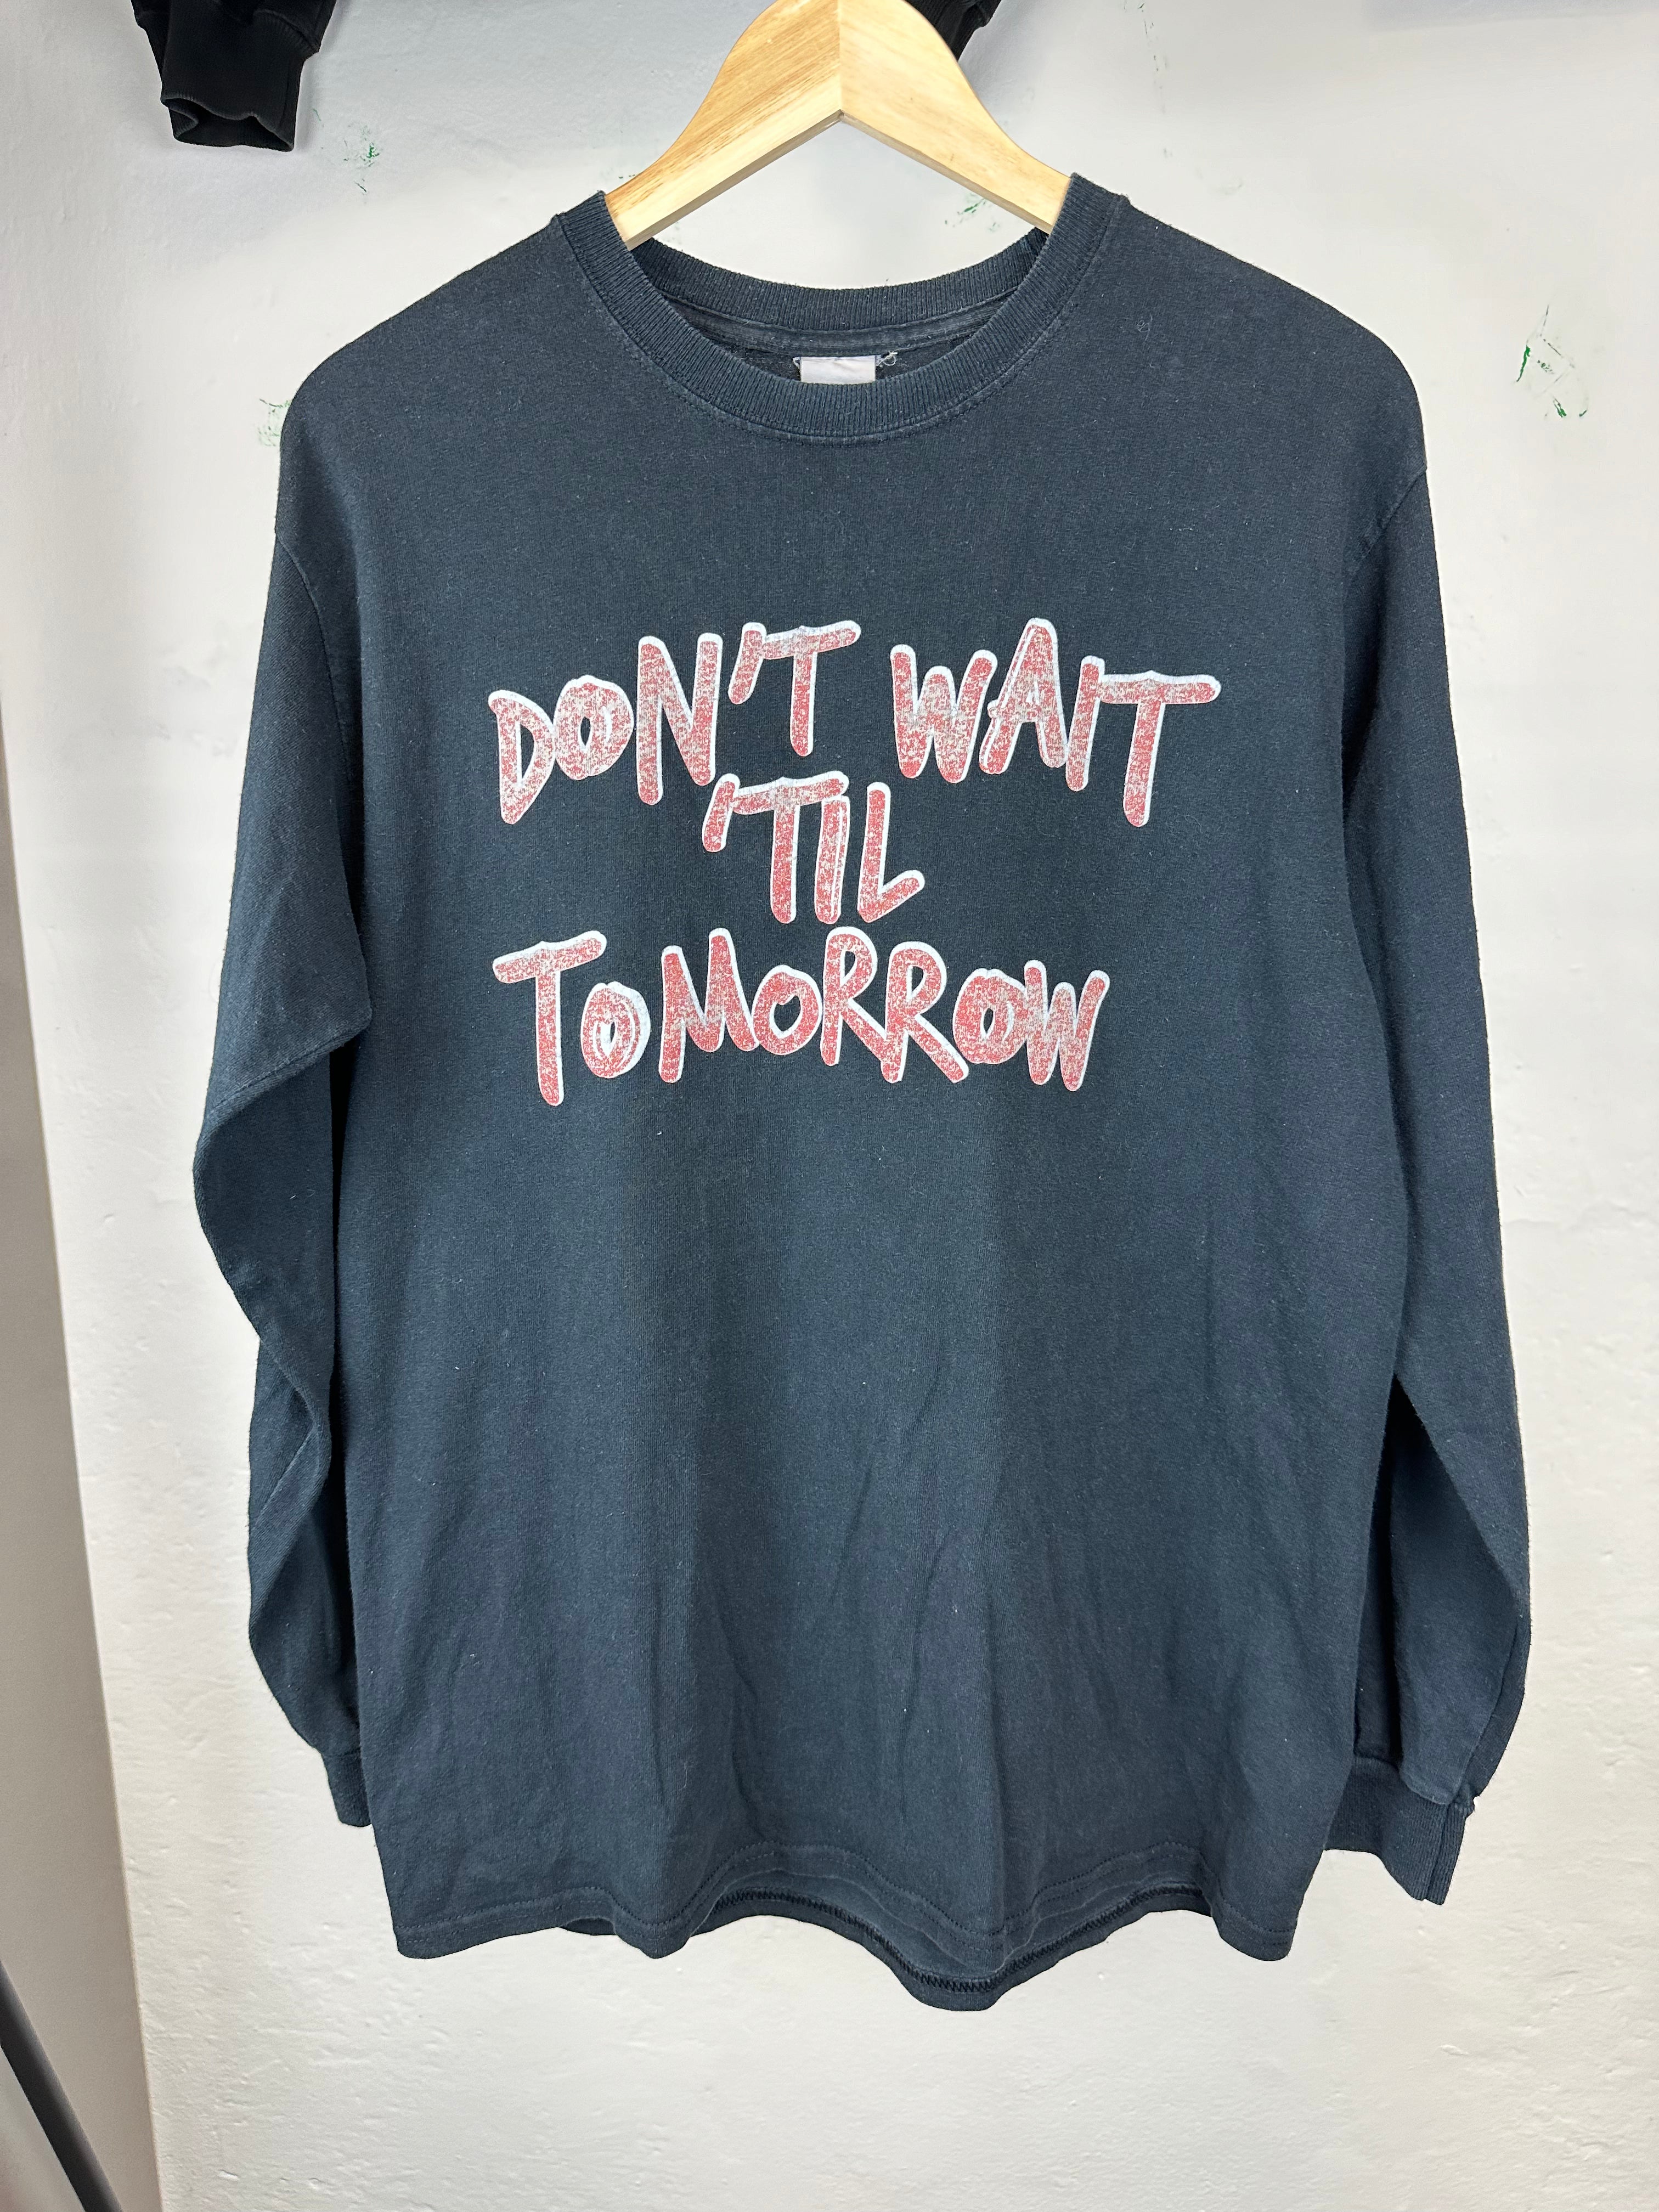 Vintage "Don't wait till tomorrow" t-shirt - size L